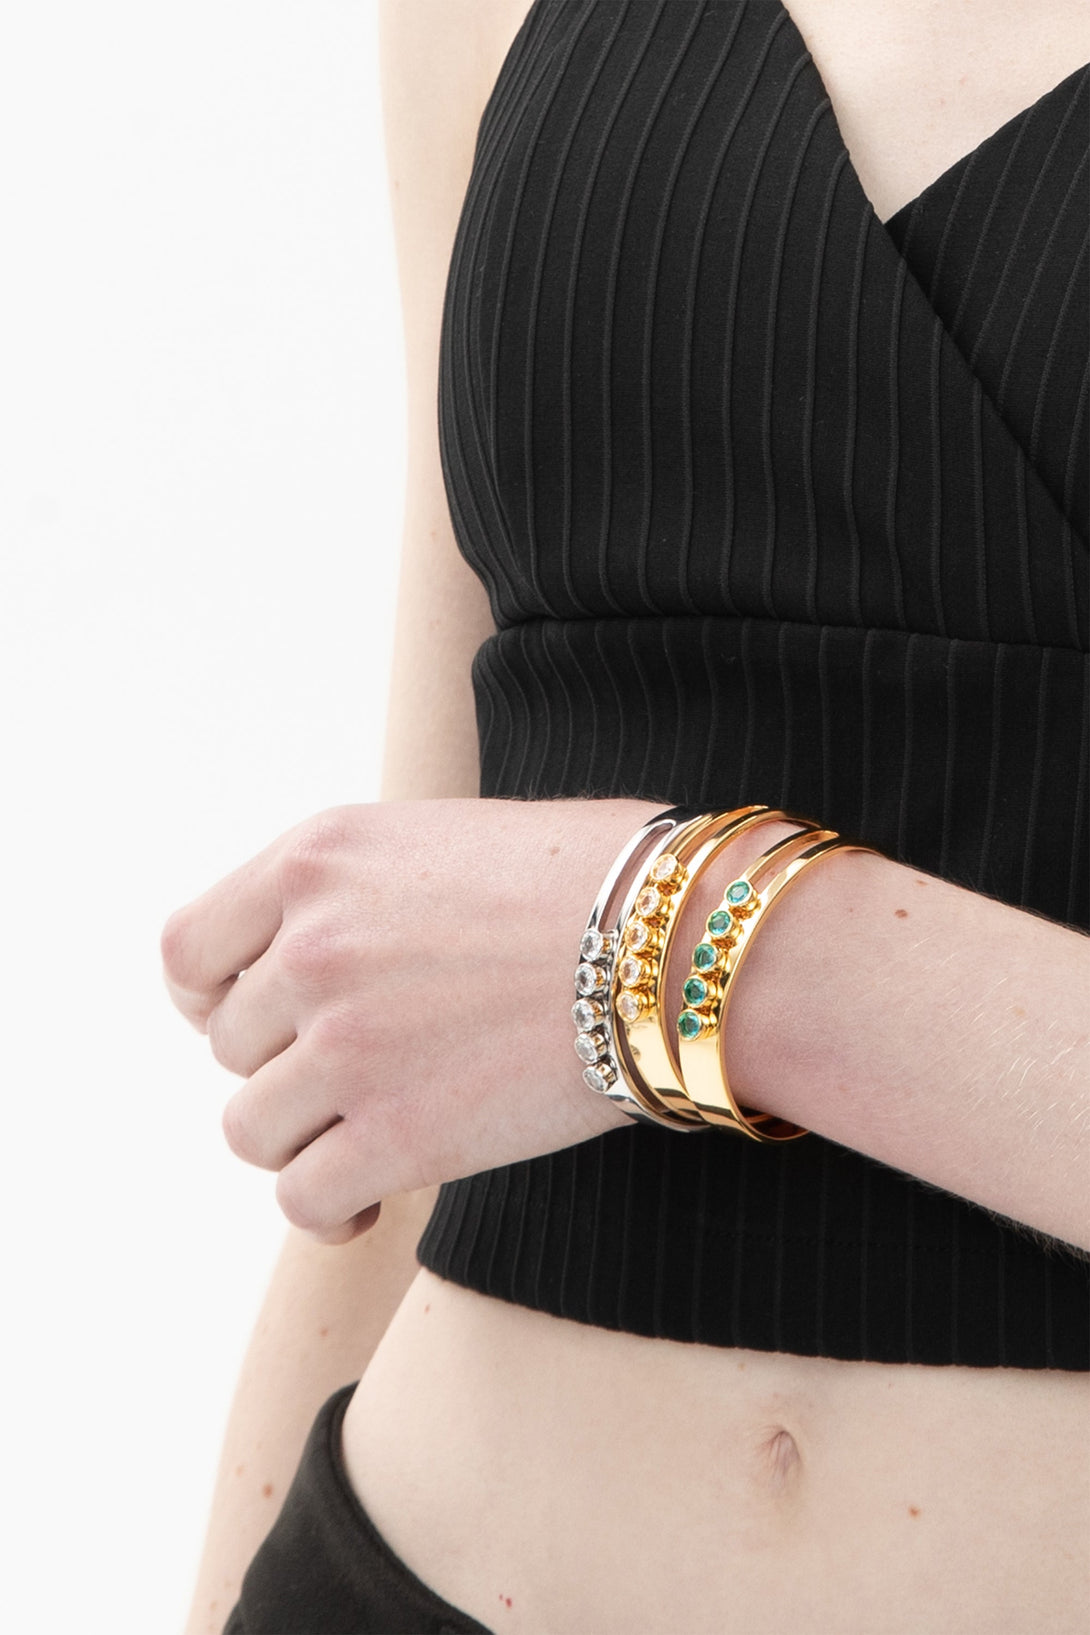 Audrey Gold Twinkling Clear Zirconia Half Crescent Bangle Bracelet - Classicharms